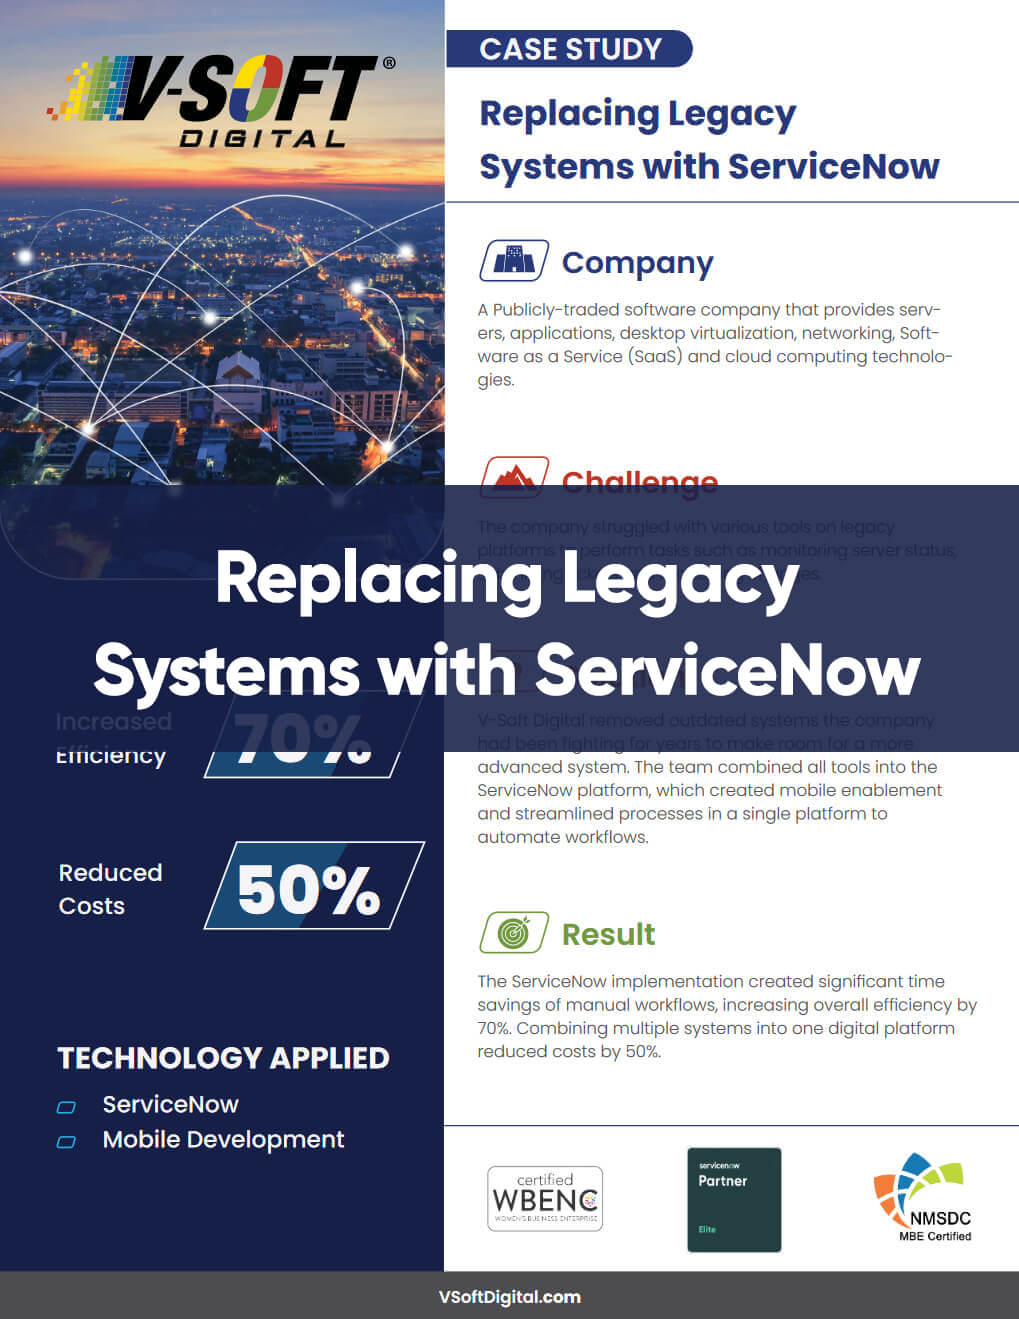 ServiceNow Cloud Automation